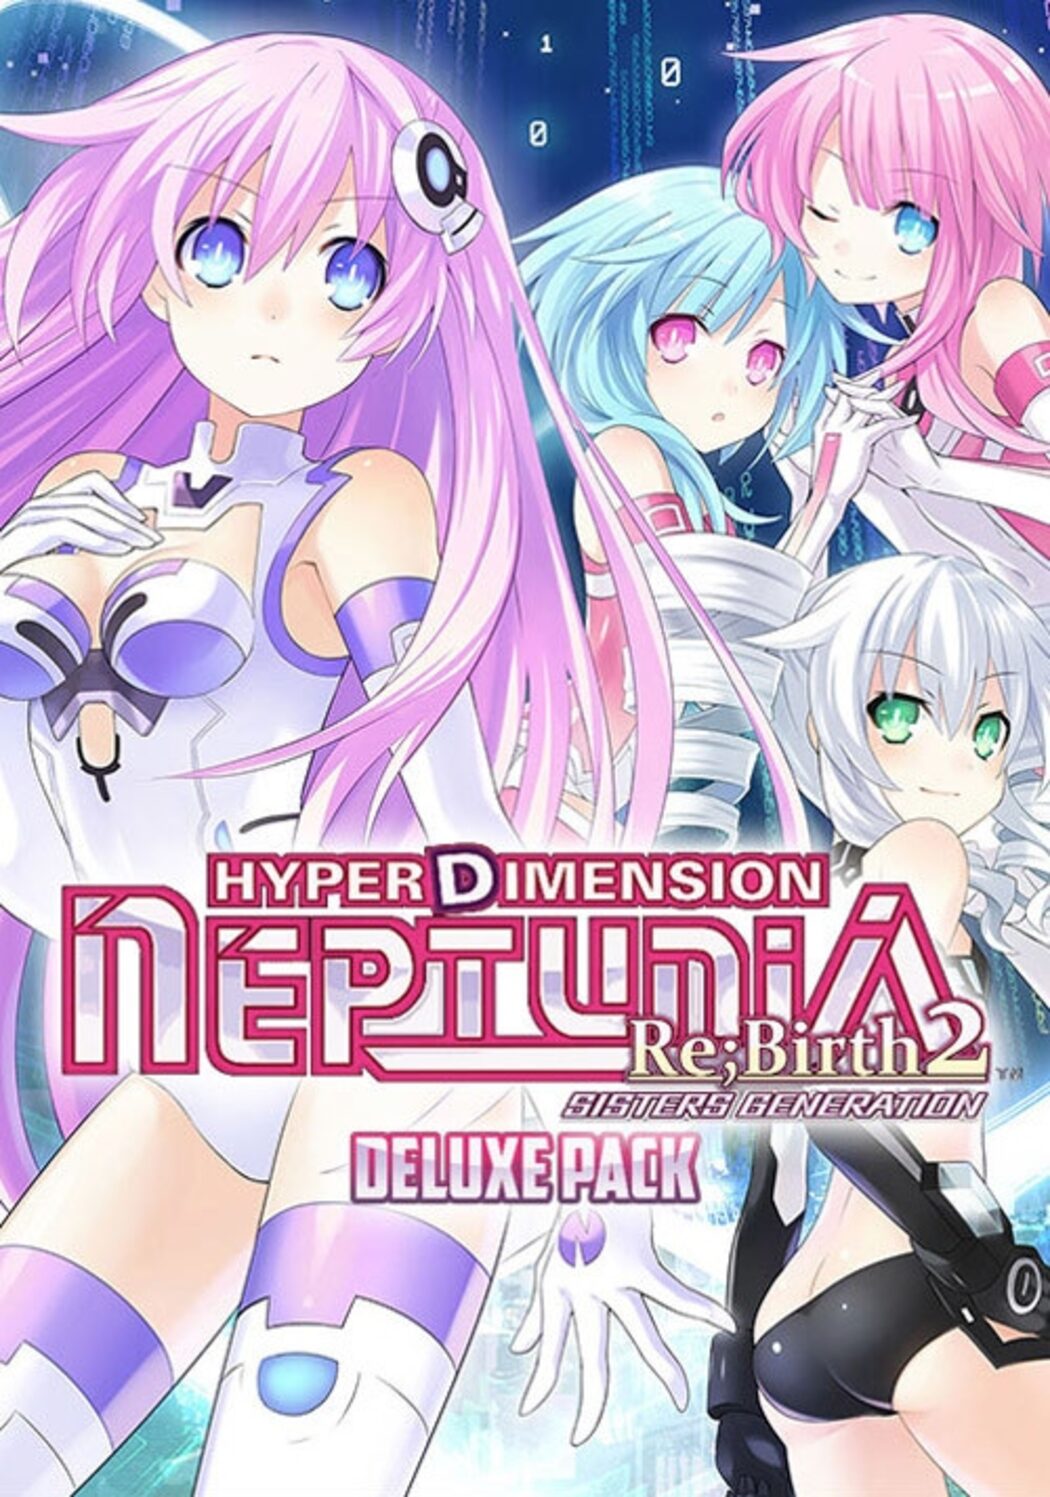 Buy Super Neptunia RPG / 勇者ネプテューヌ /勇者戰幾少女 Steam Key GLOBAL - Cheap -  !